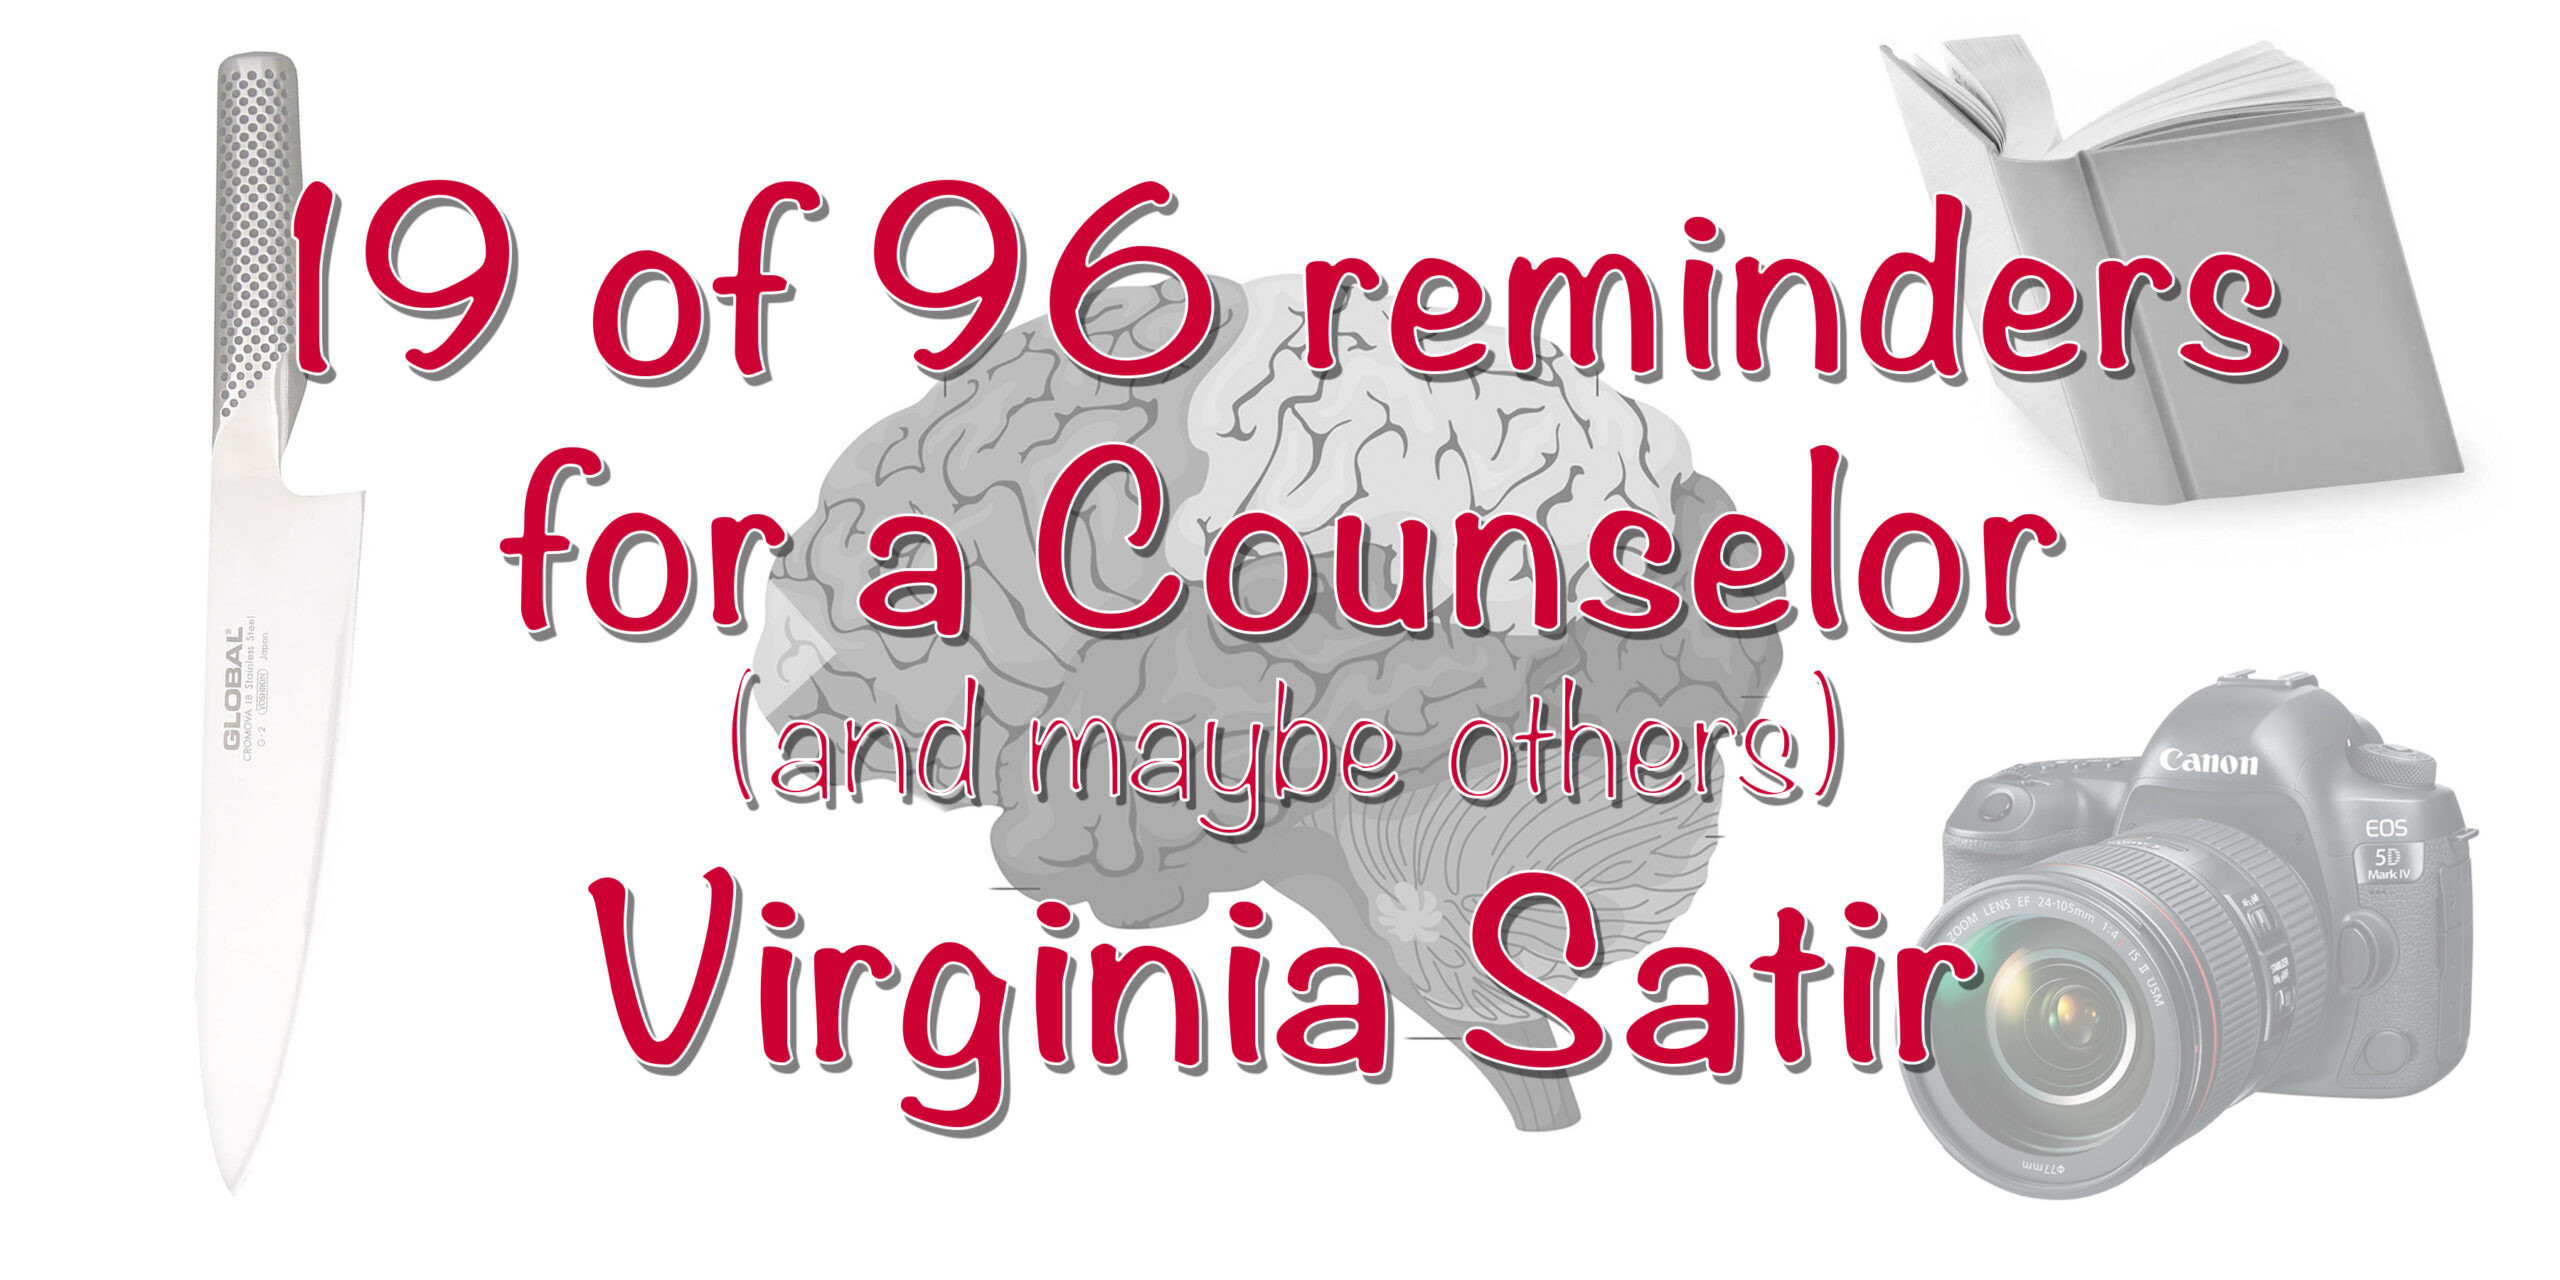 Virginia Satir – Reminder 19 of 96